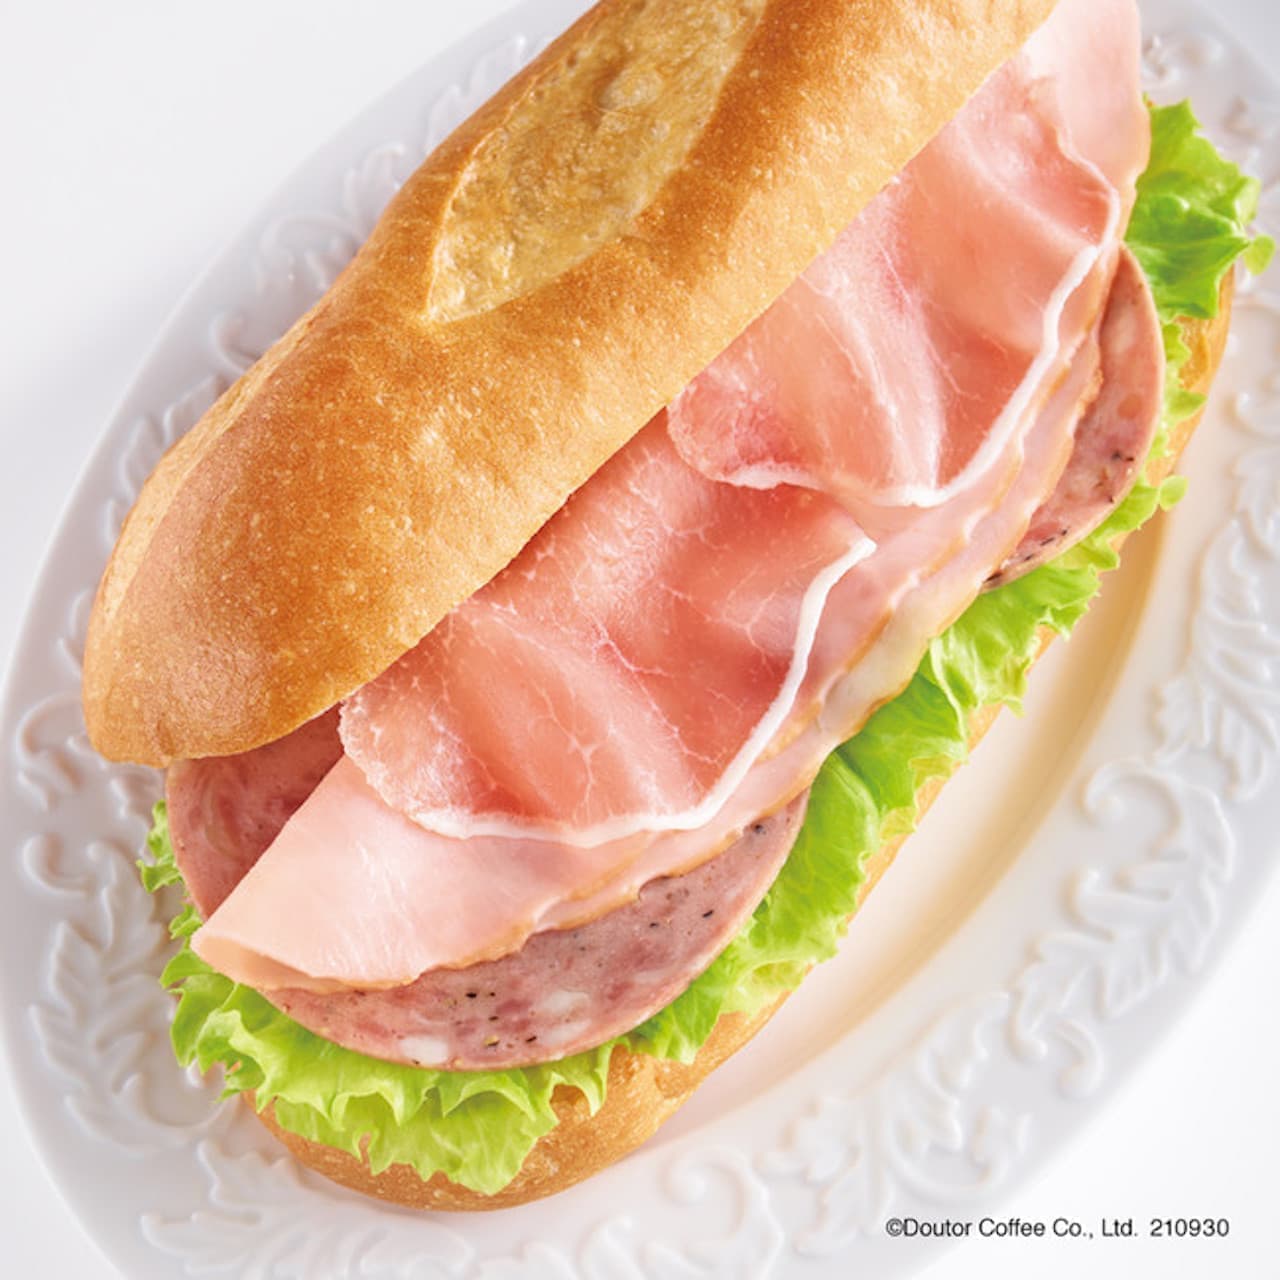 Doutor "Milan Sand A Prosciutto, Bonless Ham, Bologna Sausage"